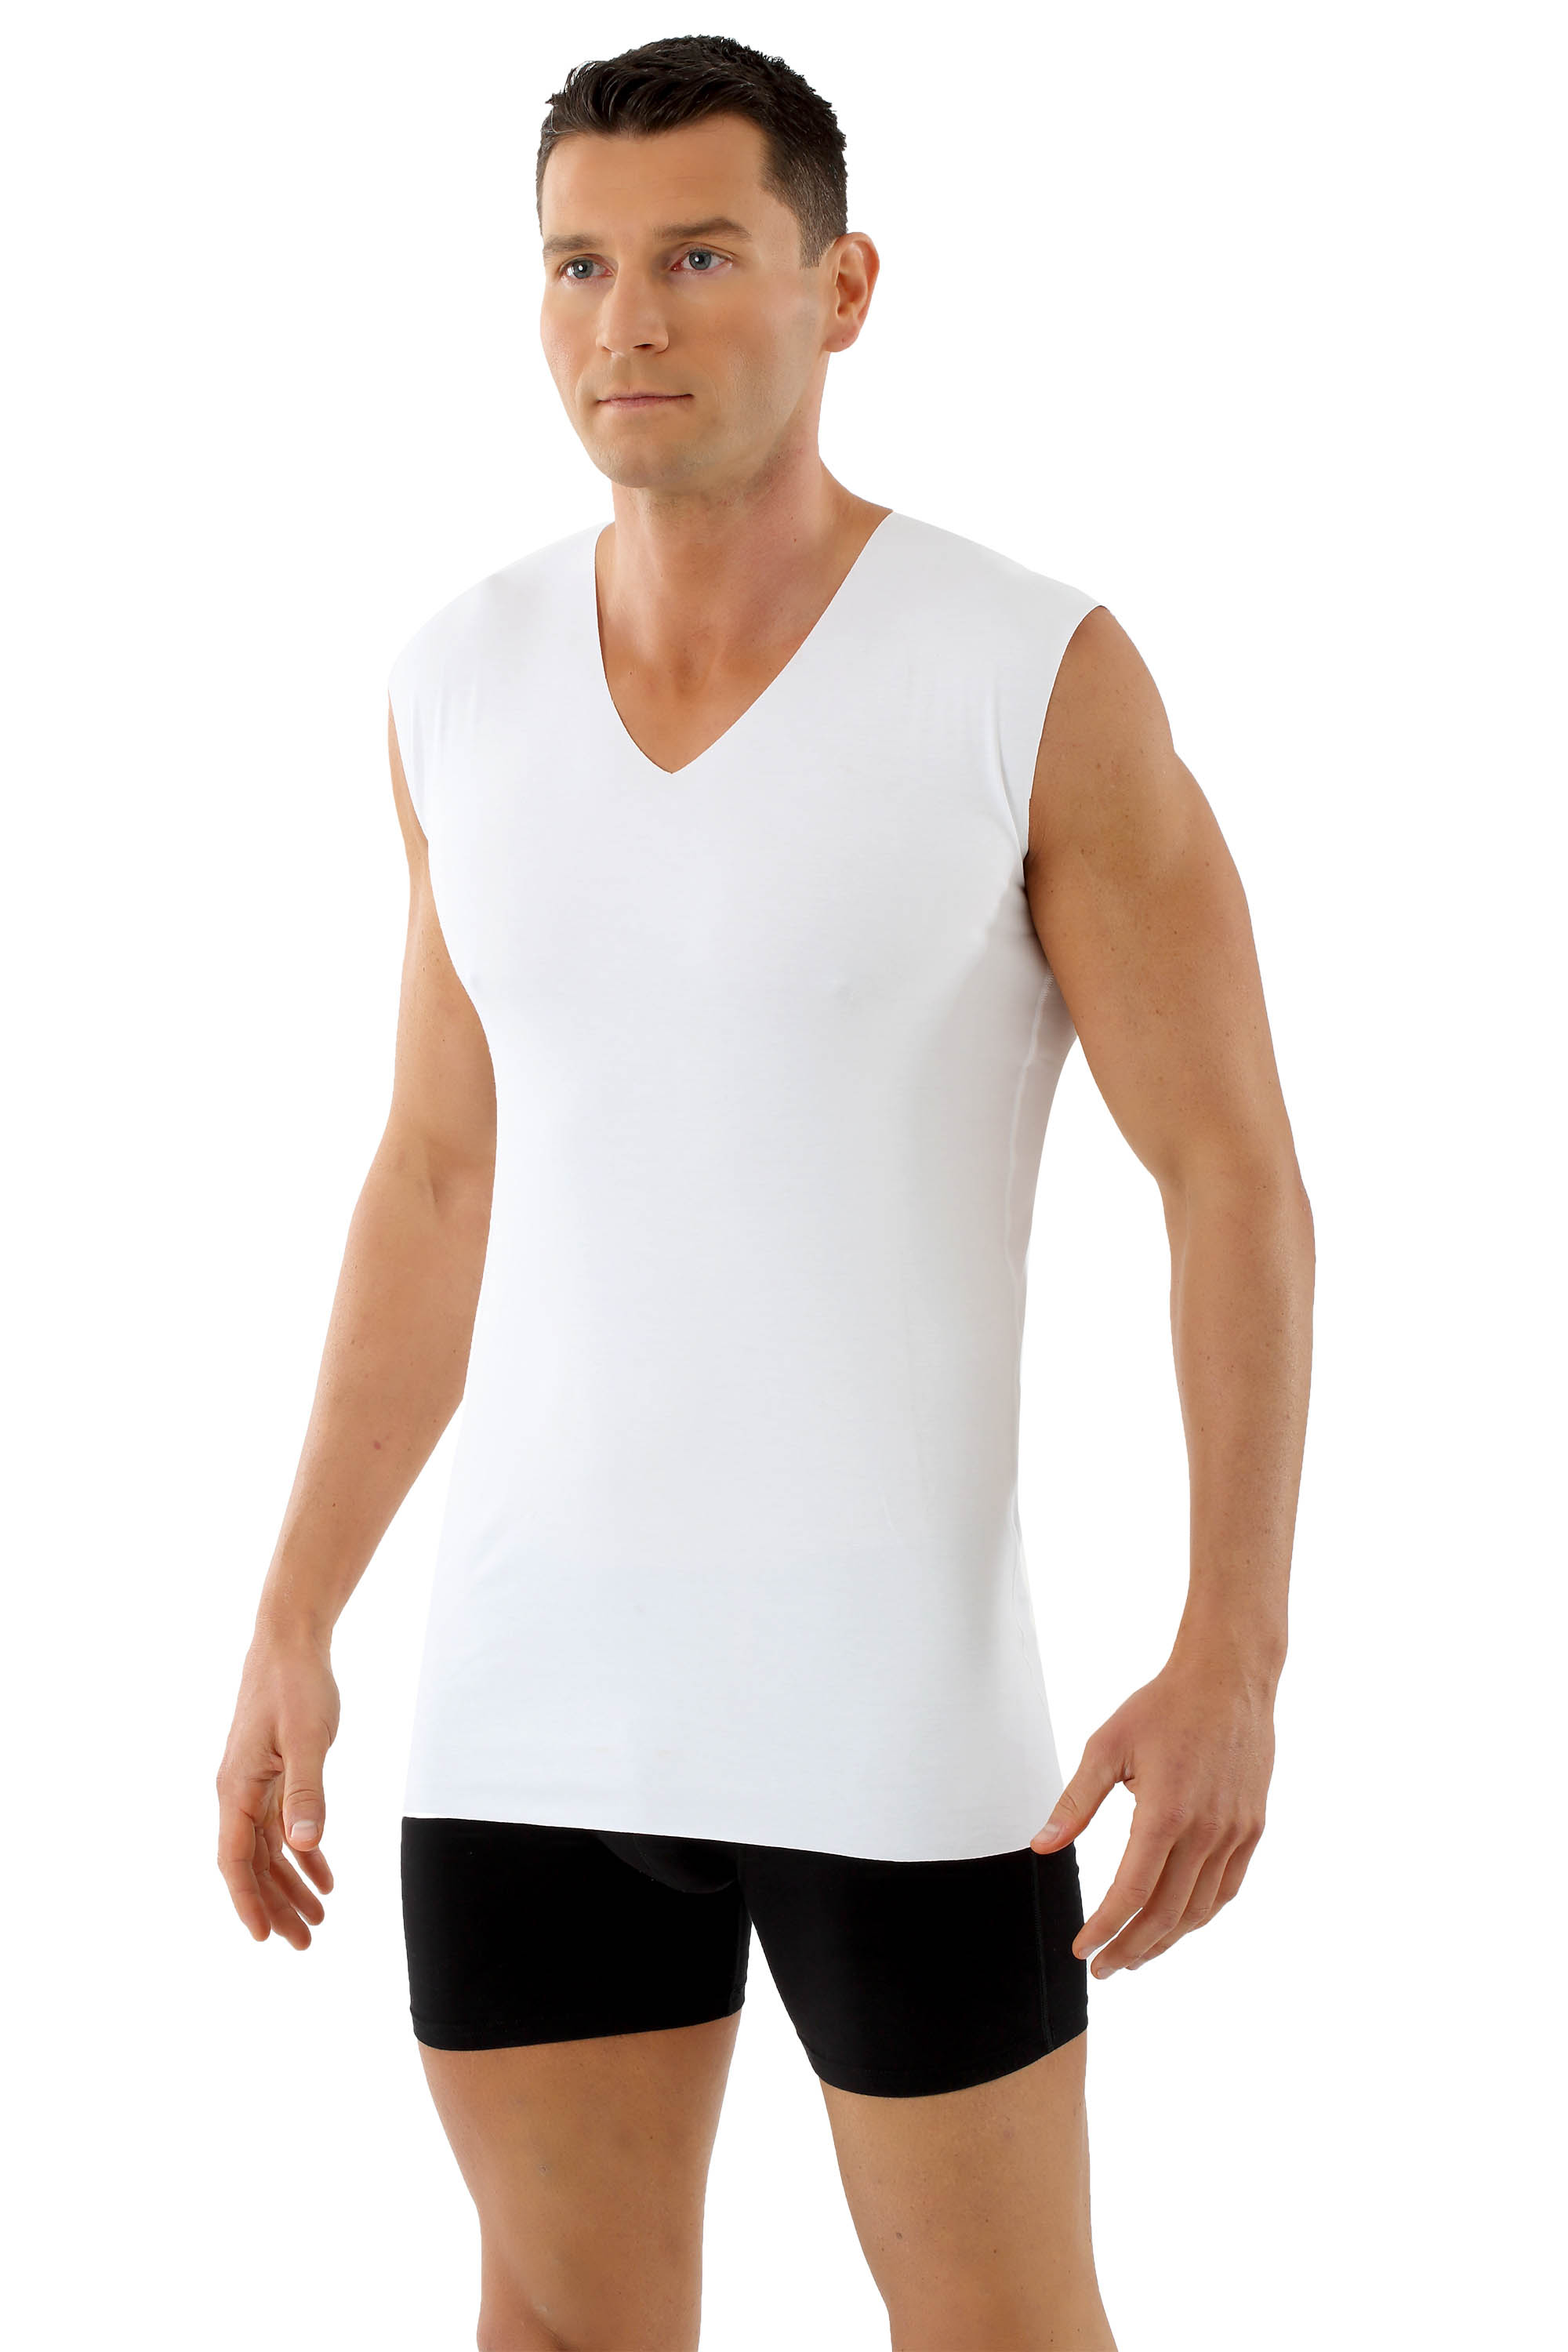 ALBERT KREUZ | Laser cut seamless v-neck undershirt sleeveless stretch  cotton white